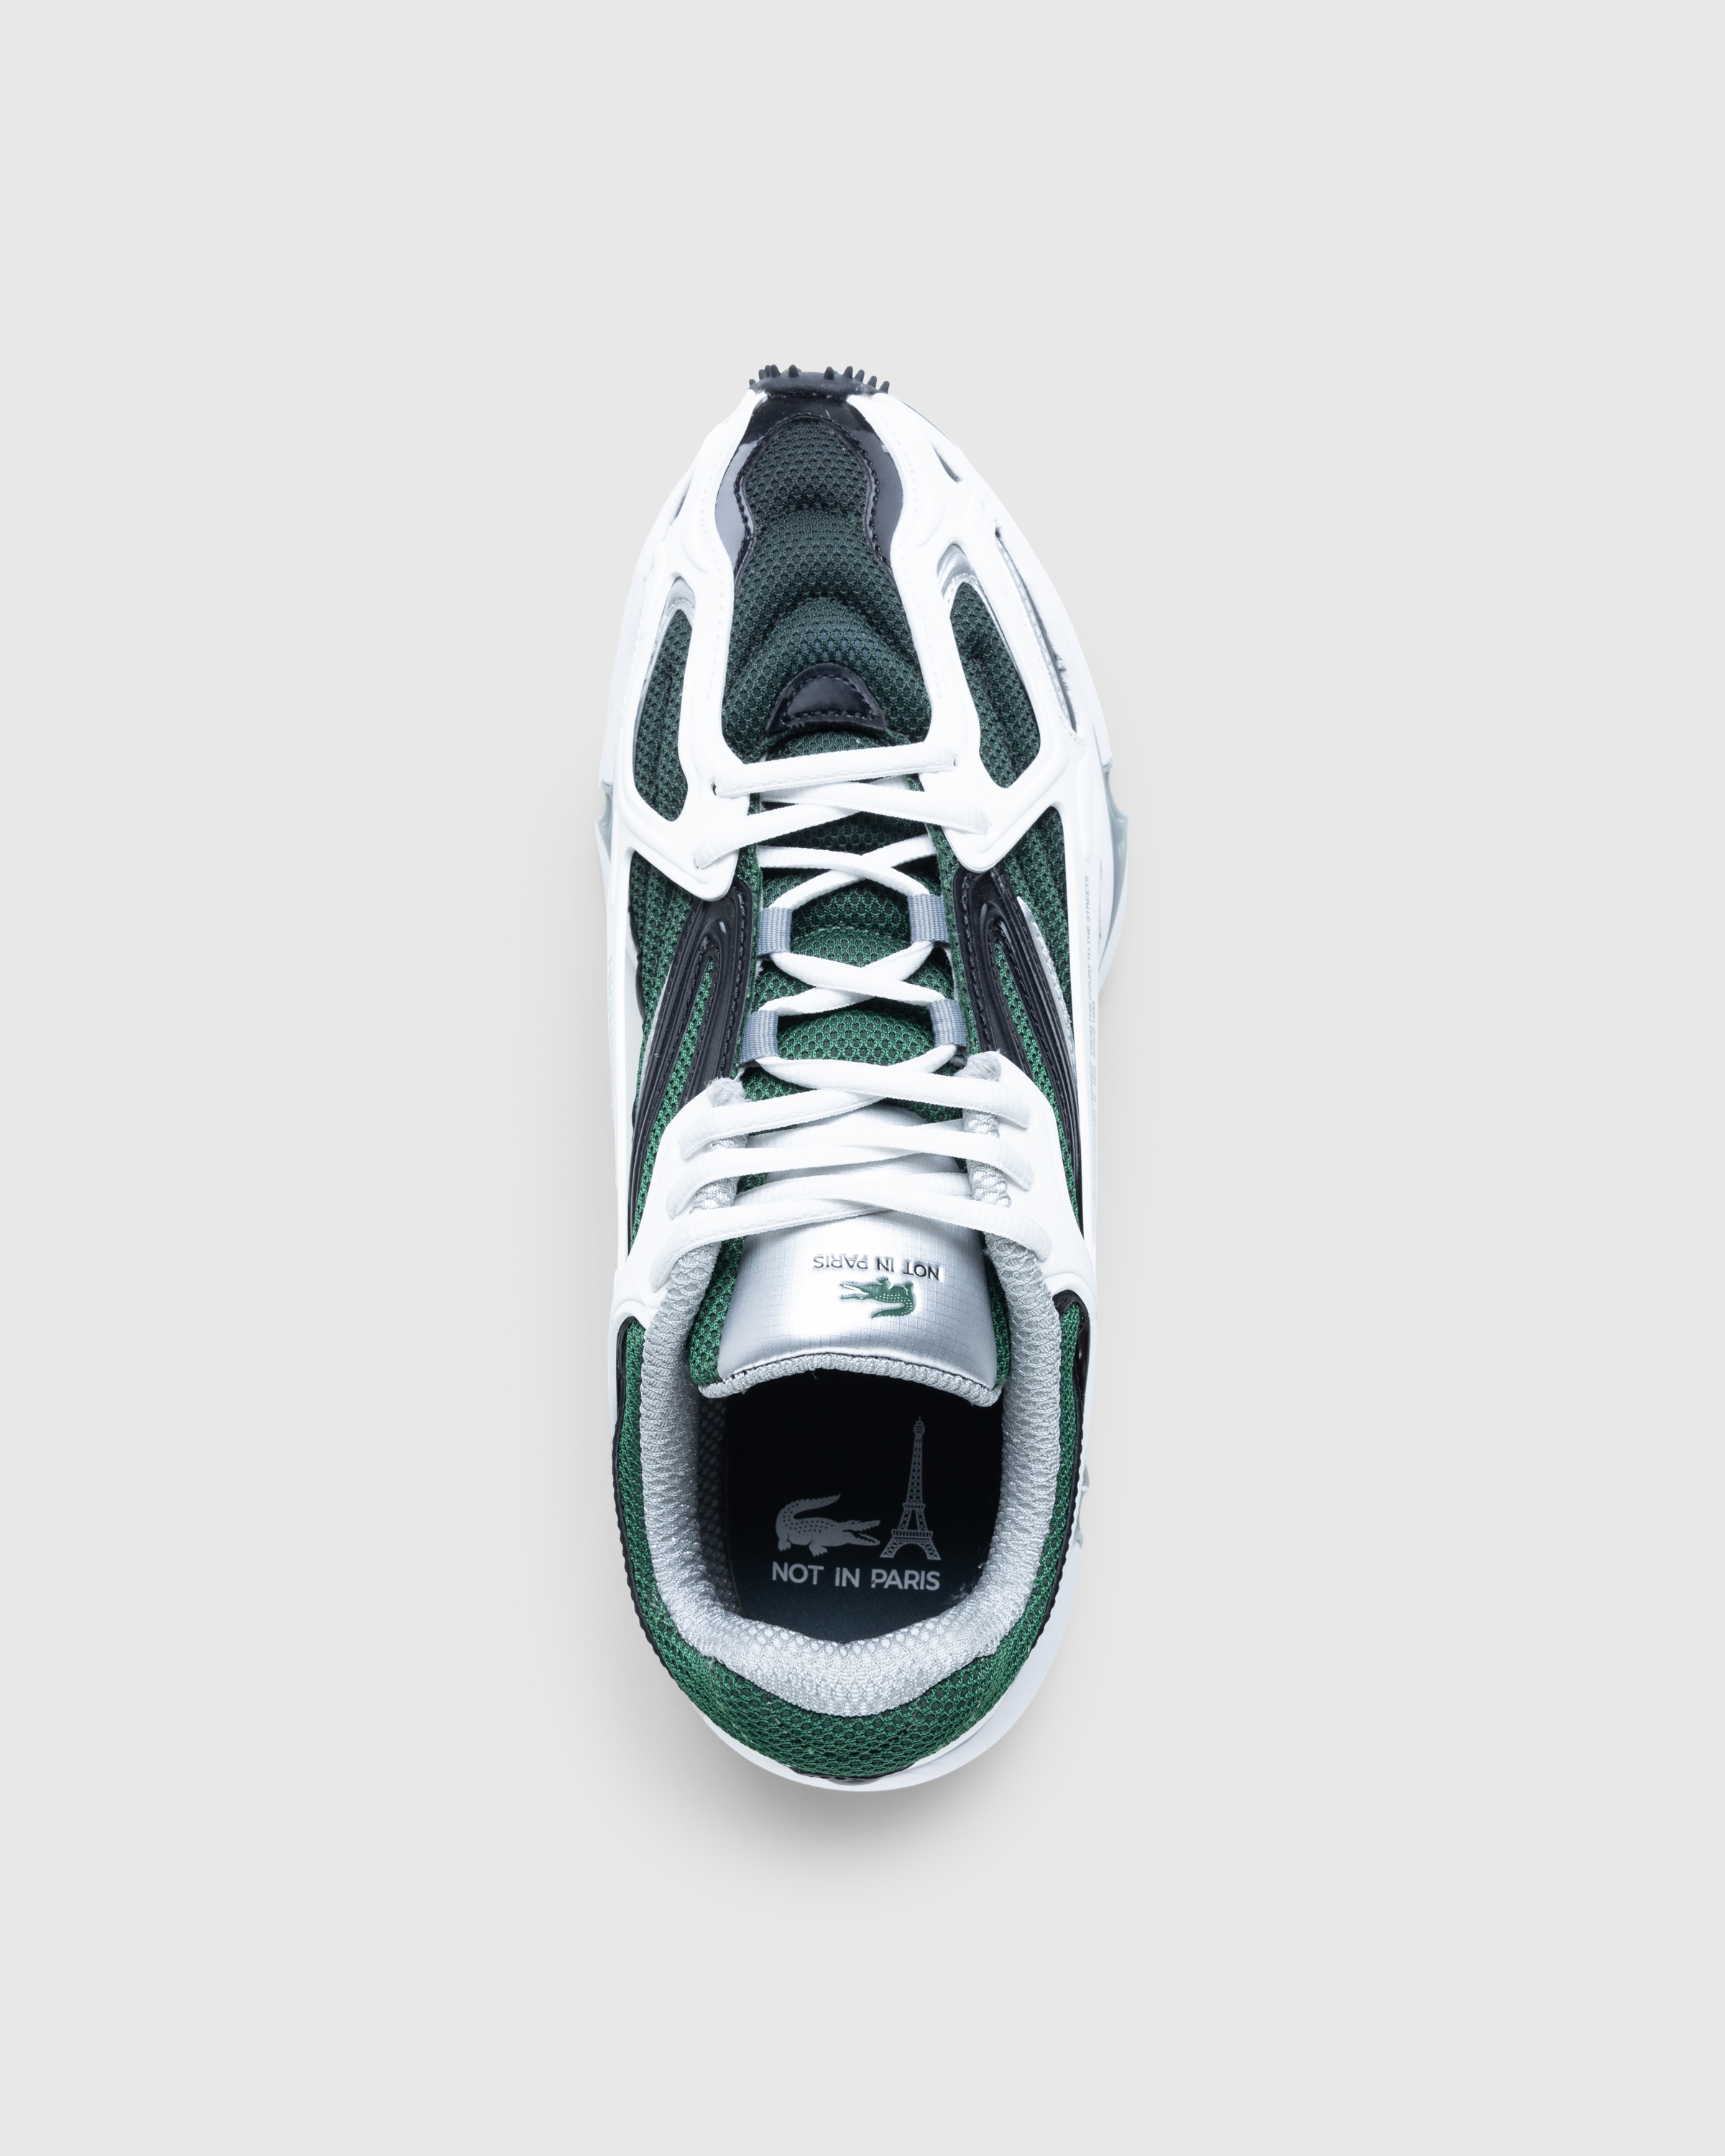 Lacoste x Highsnobiety – L003 2k24 (M) "Not In Paris" Multi - Low Top Sneakers - Green - Image 5